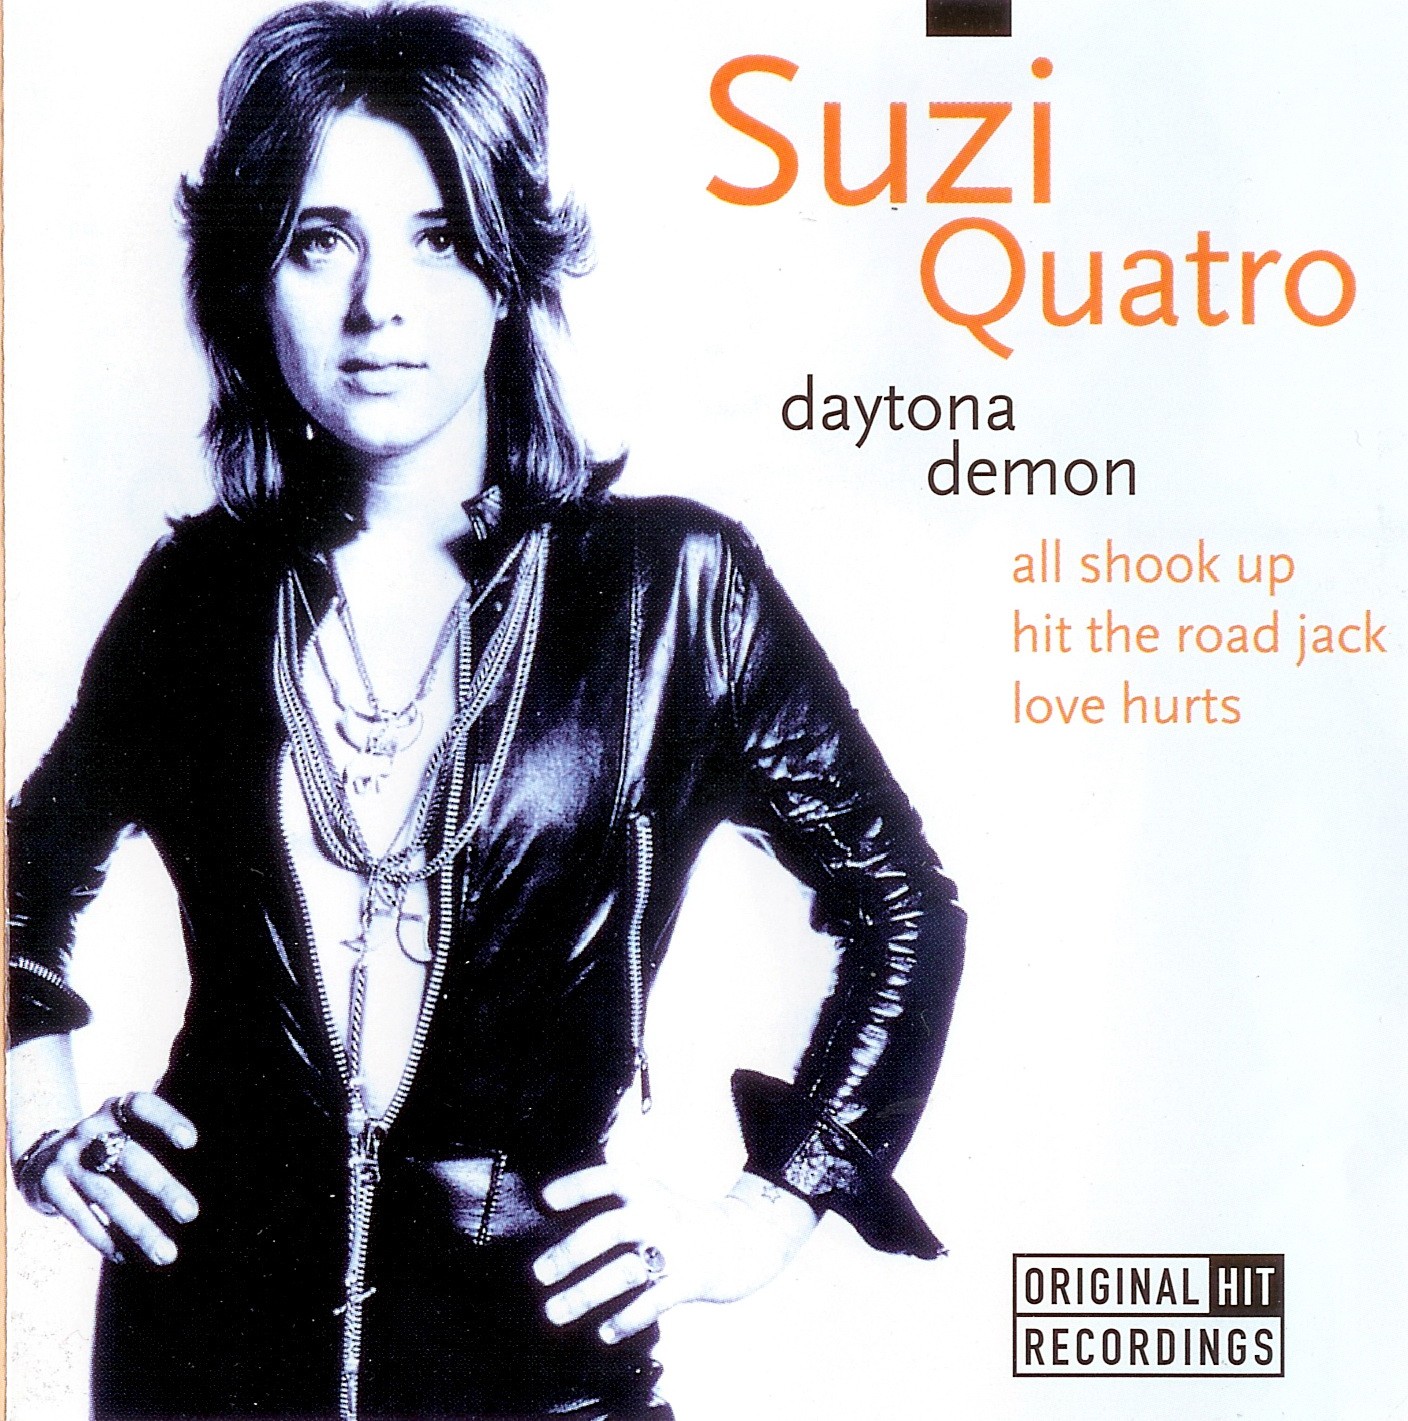 Включи кватро. Suzi quatro. Suzi quatro 1973. Suzi quatro - quatro обложка. Suzi quatro Сьюзи кватро 1973 дебютный альбом.